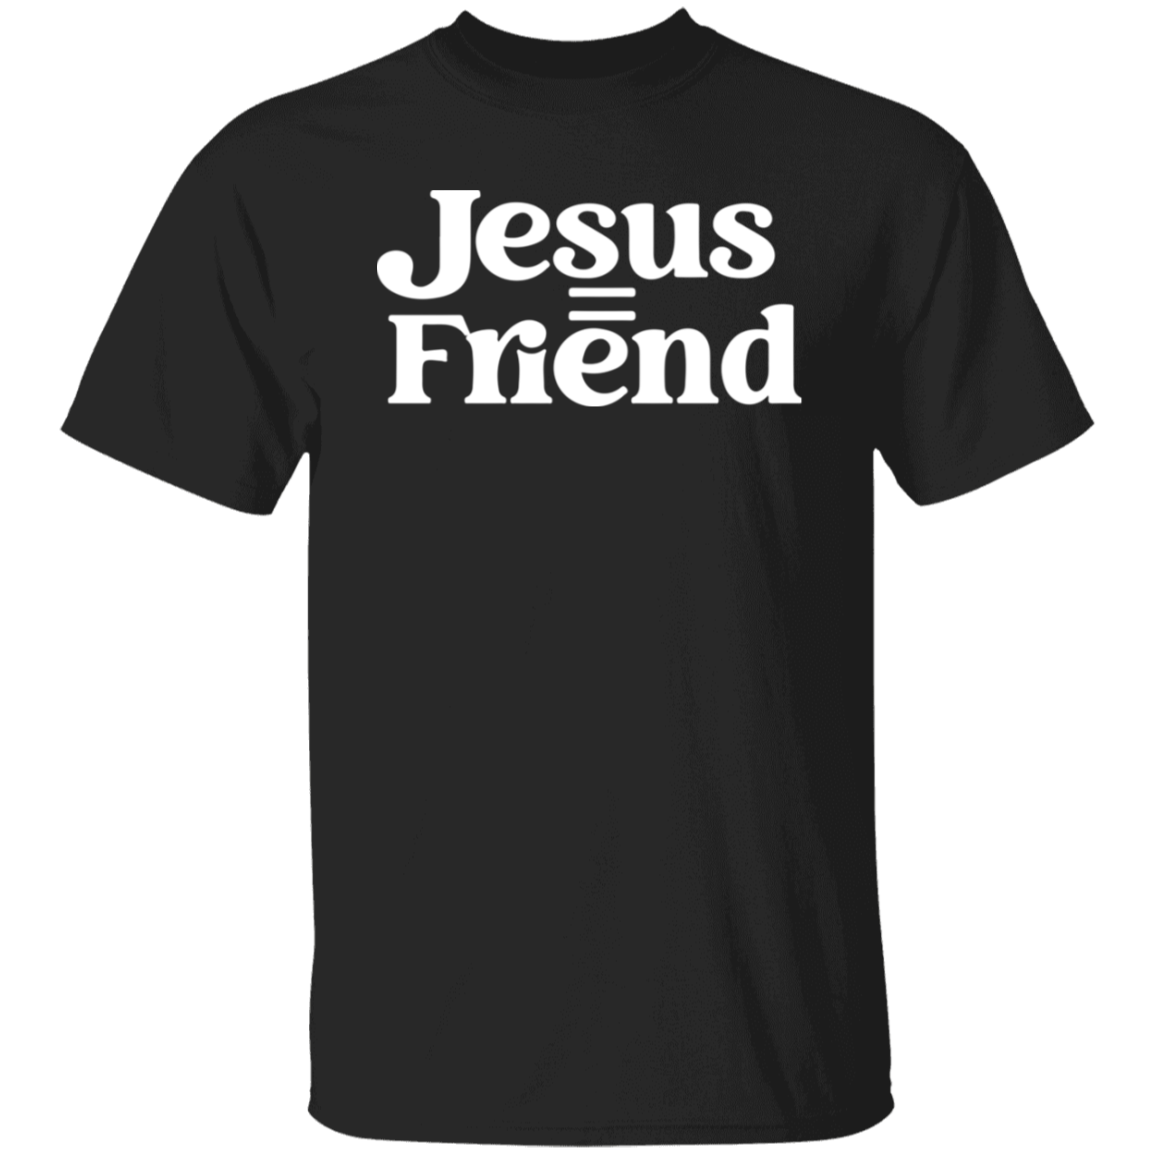 Jesus = Friend